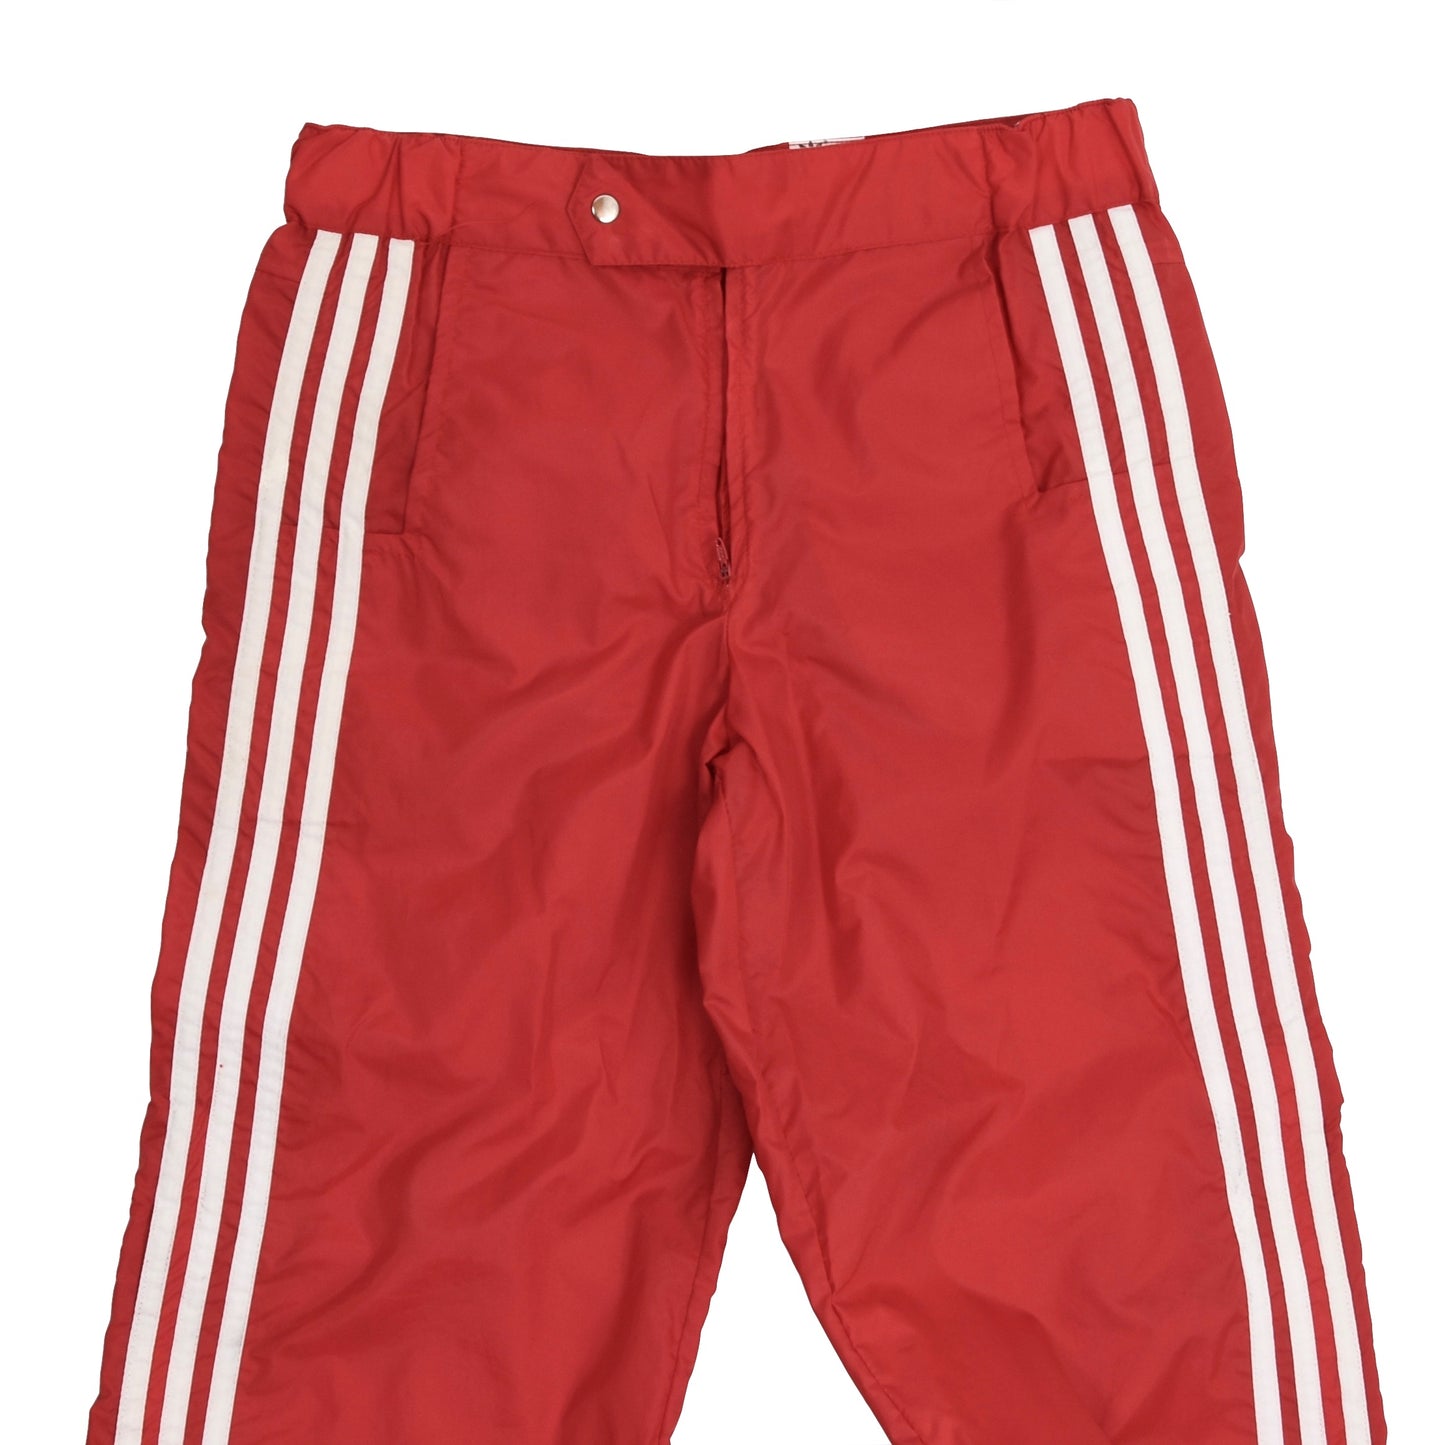 Vintage 80er Jahre Adidas Nylon Jogging/Aufwärmanzug Größe 46/XS - rot